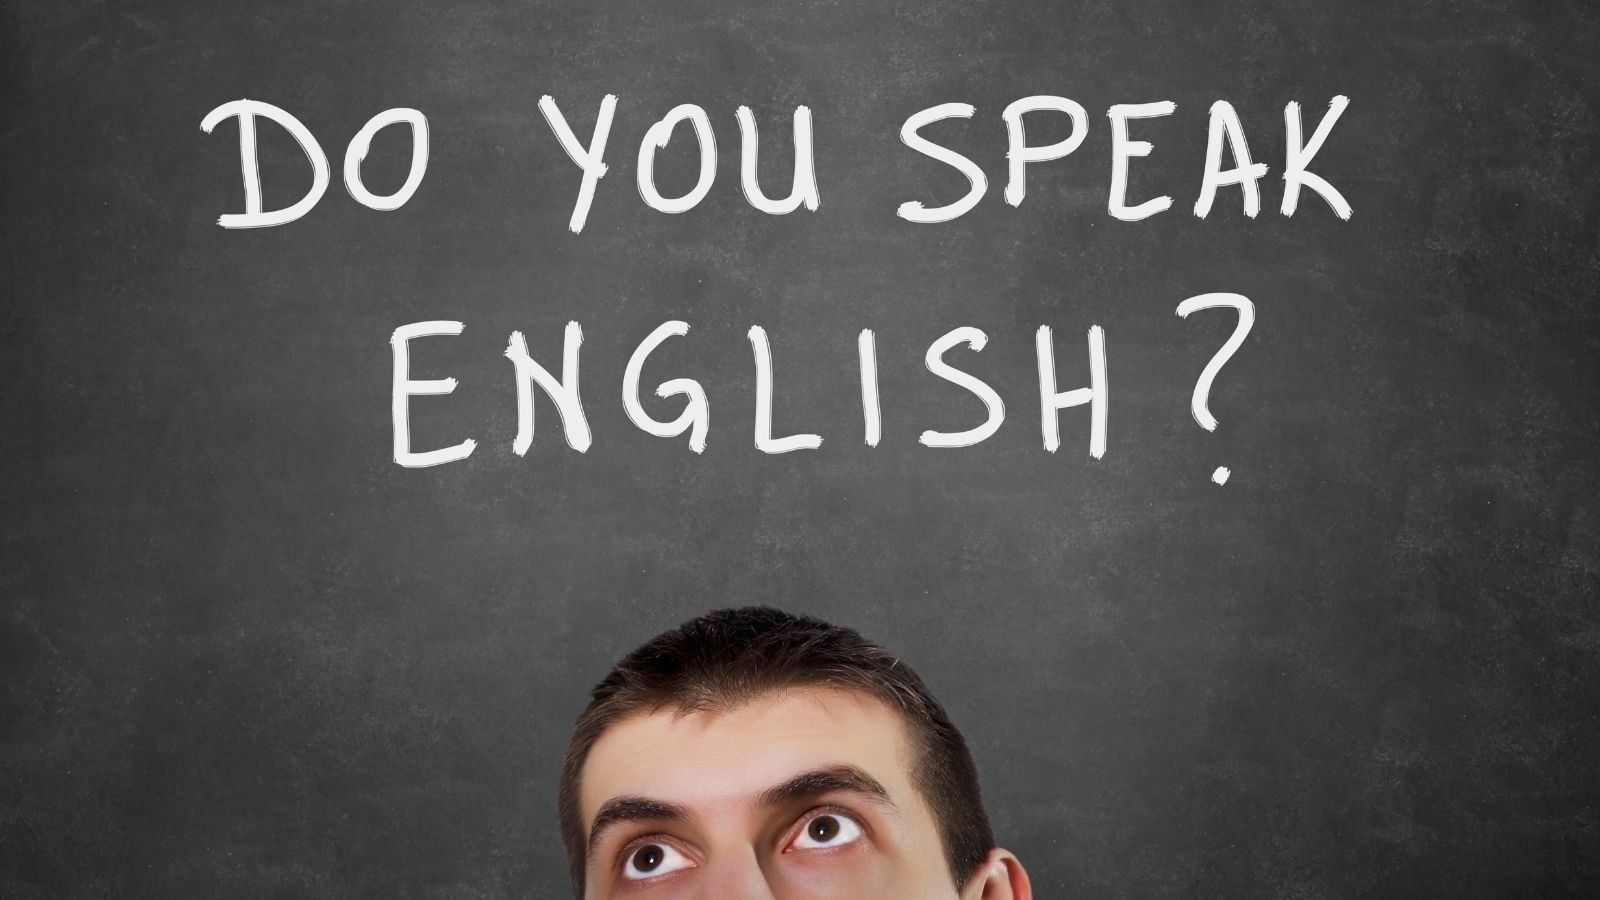 Do you speak english well. Do you speak English. Do you speak English иконка. So you speak English фото для канала.